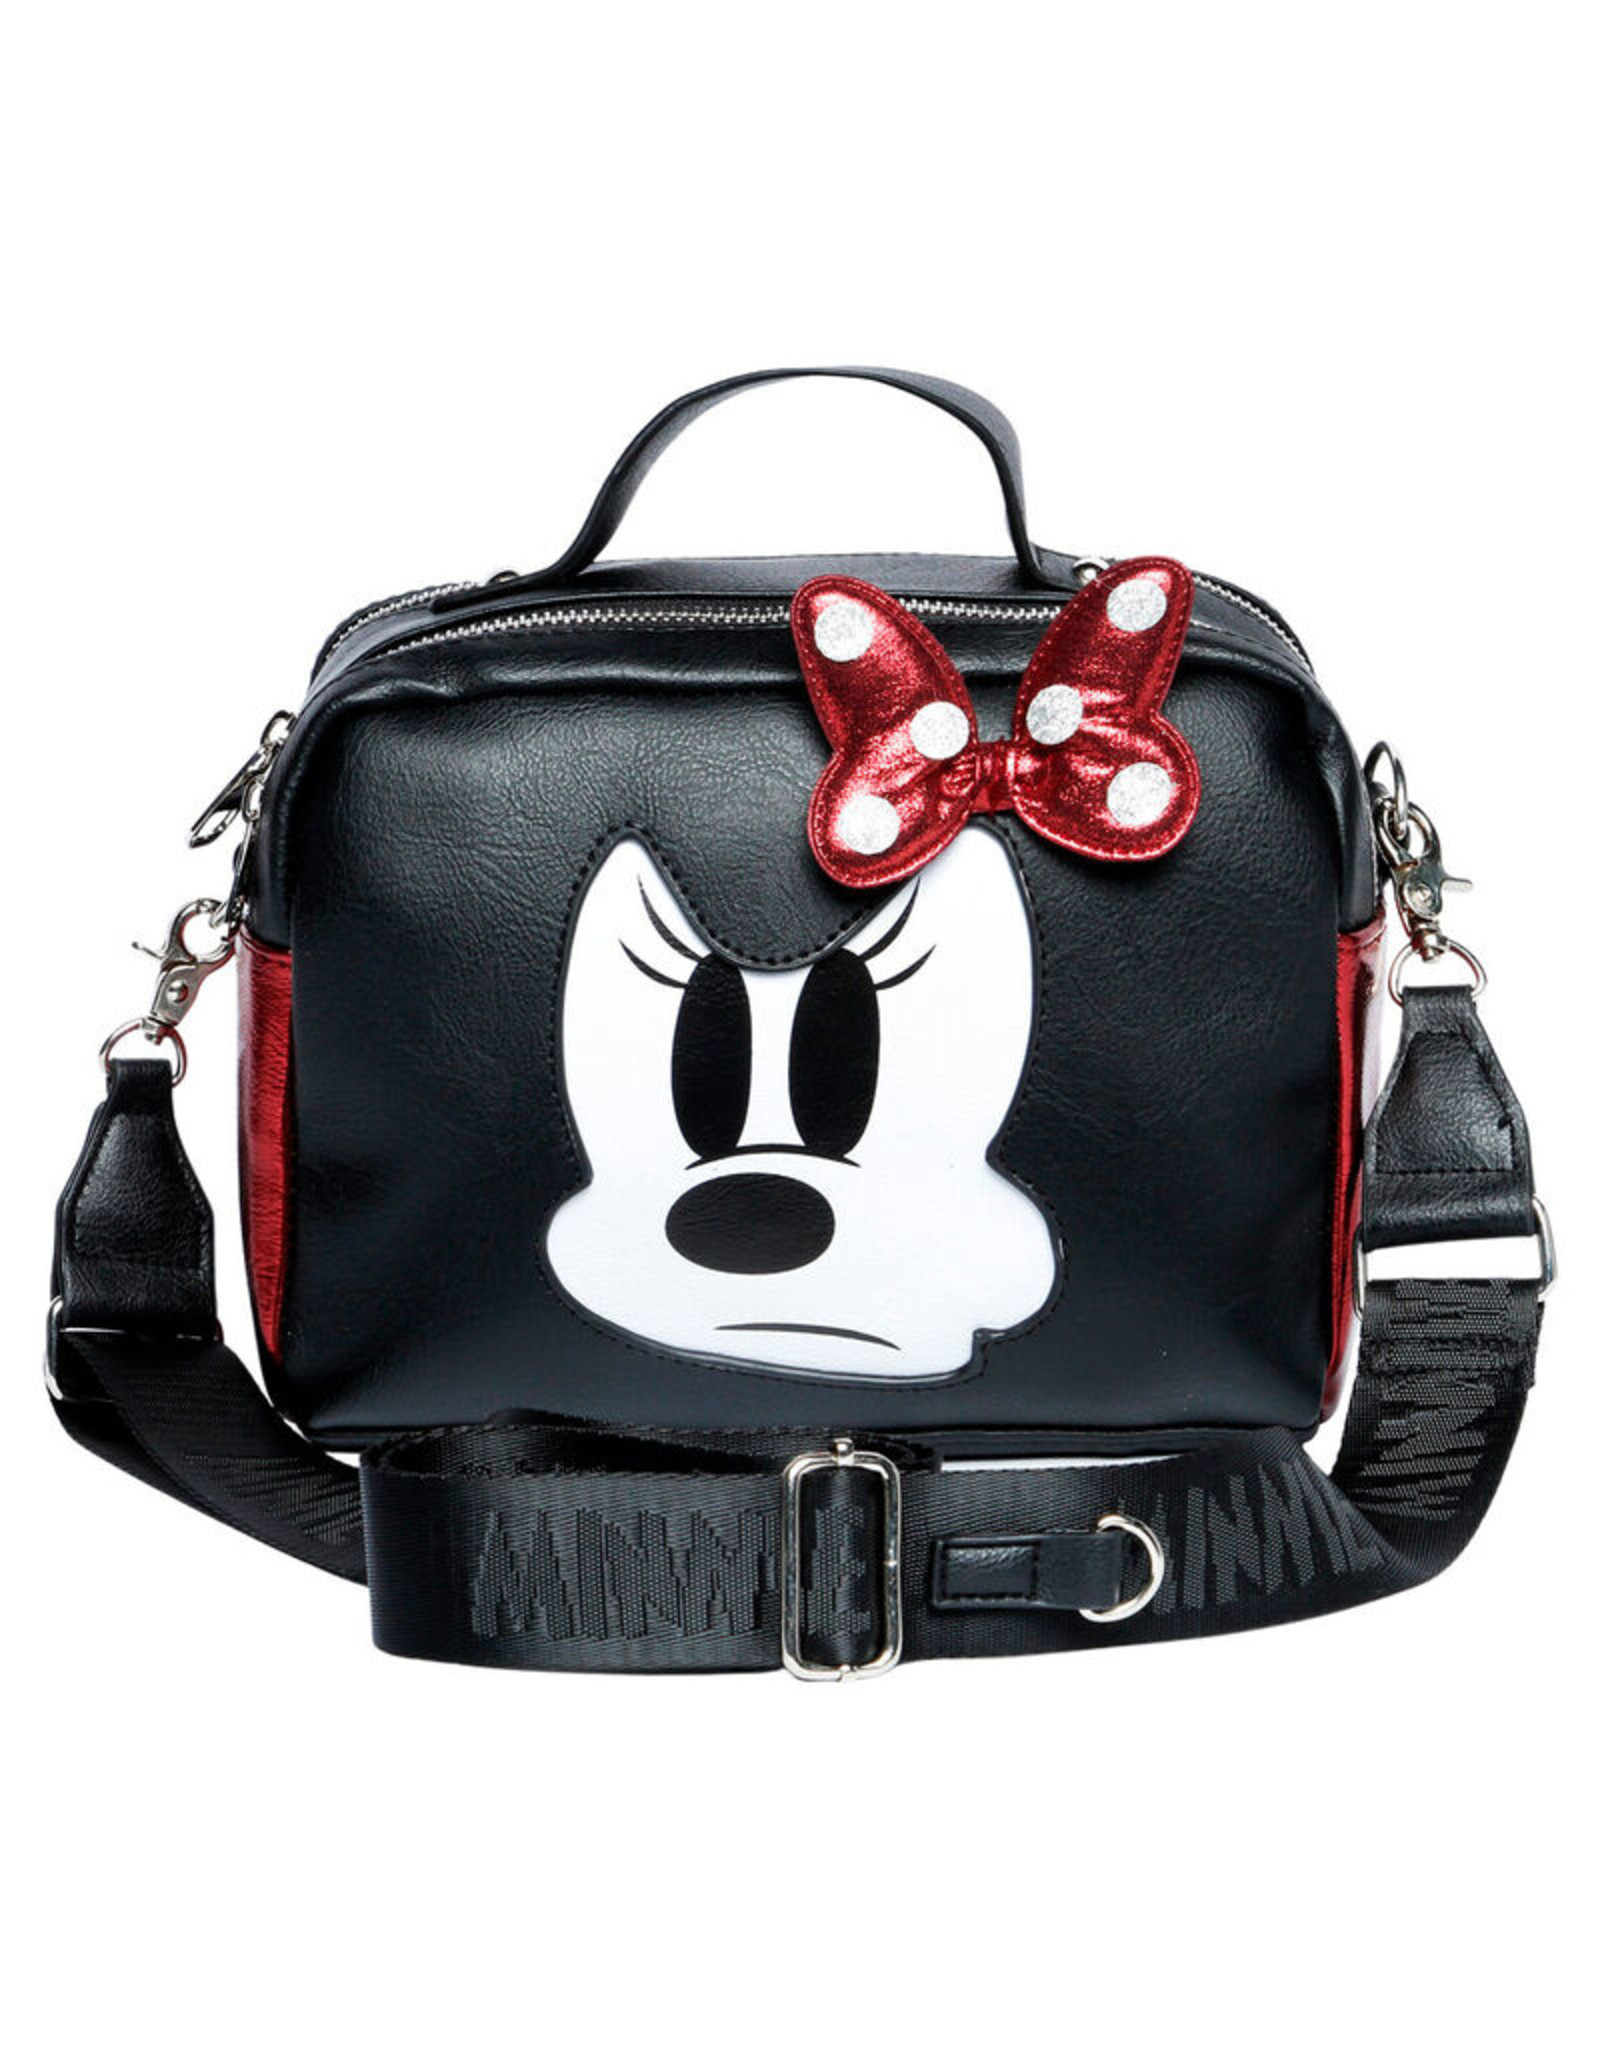 Karactermania Disney bags - Disney Minnie Angry handbag shoulderbag